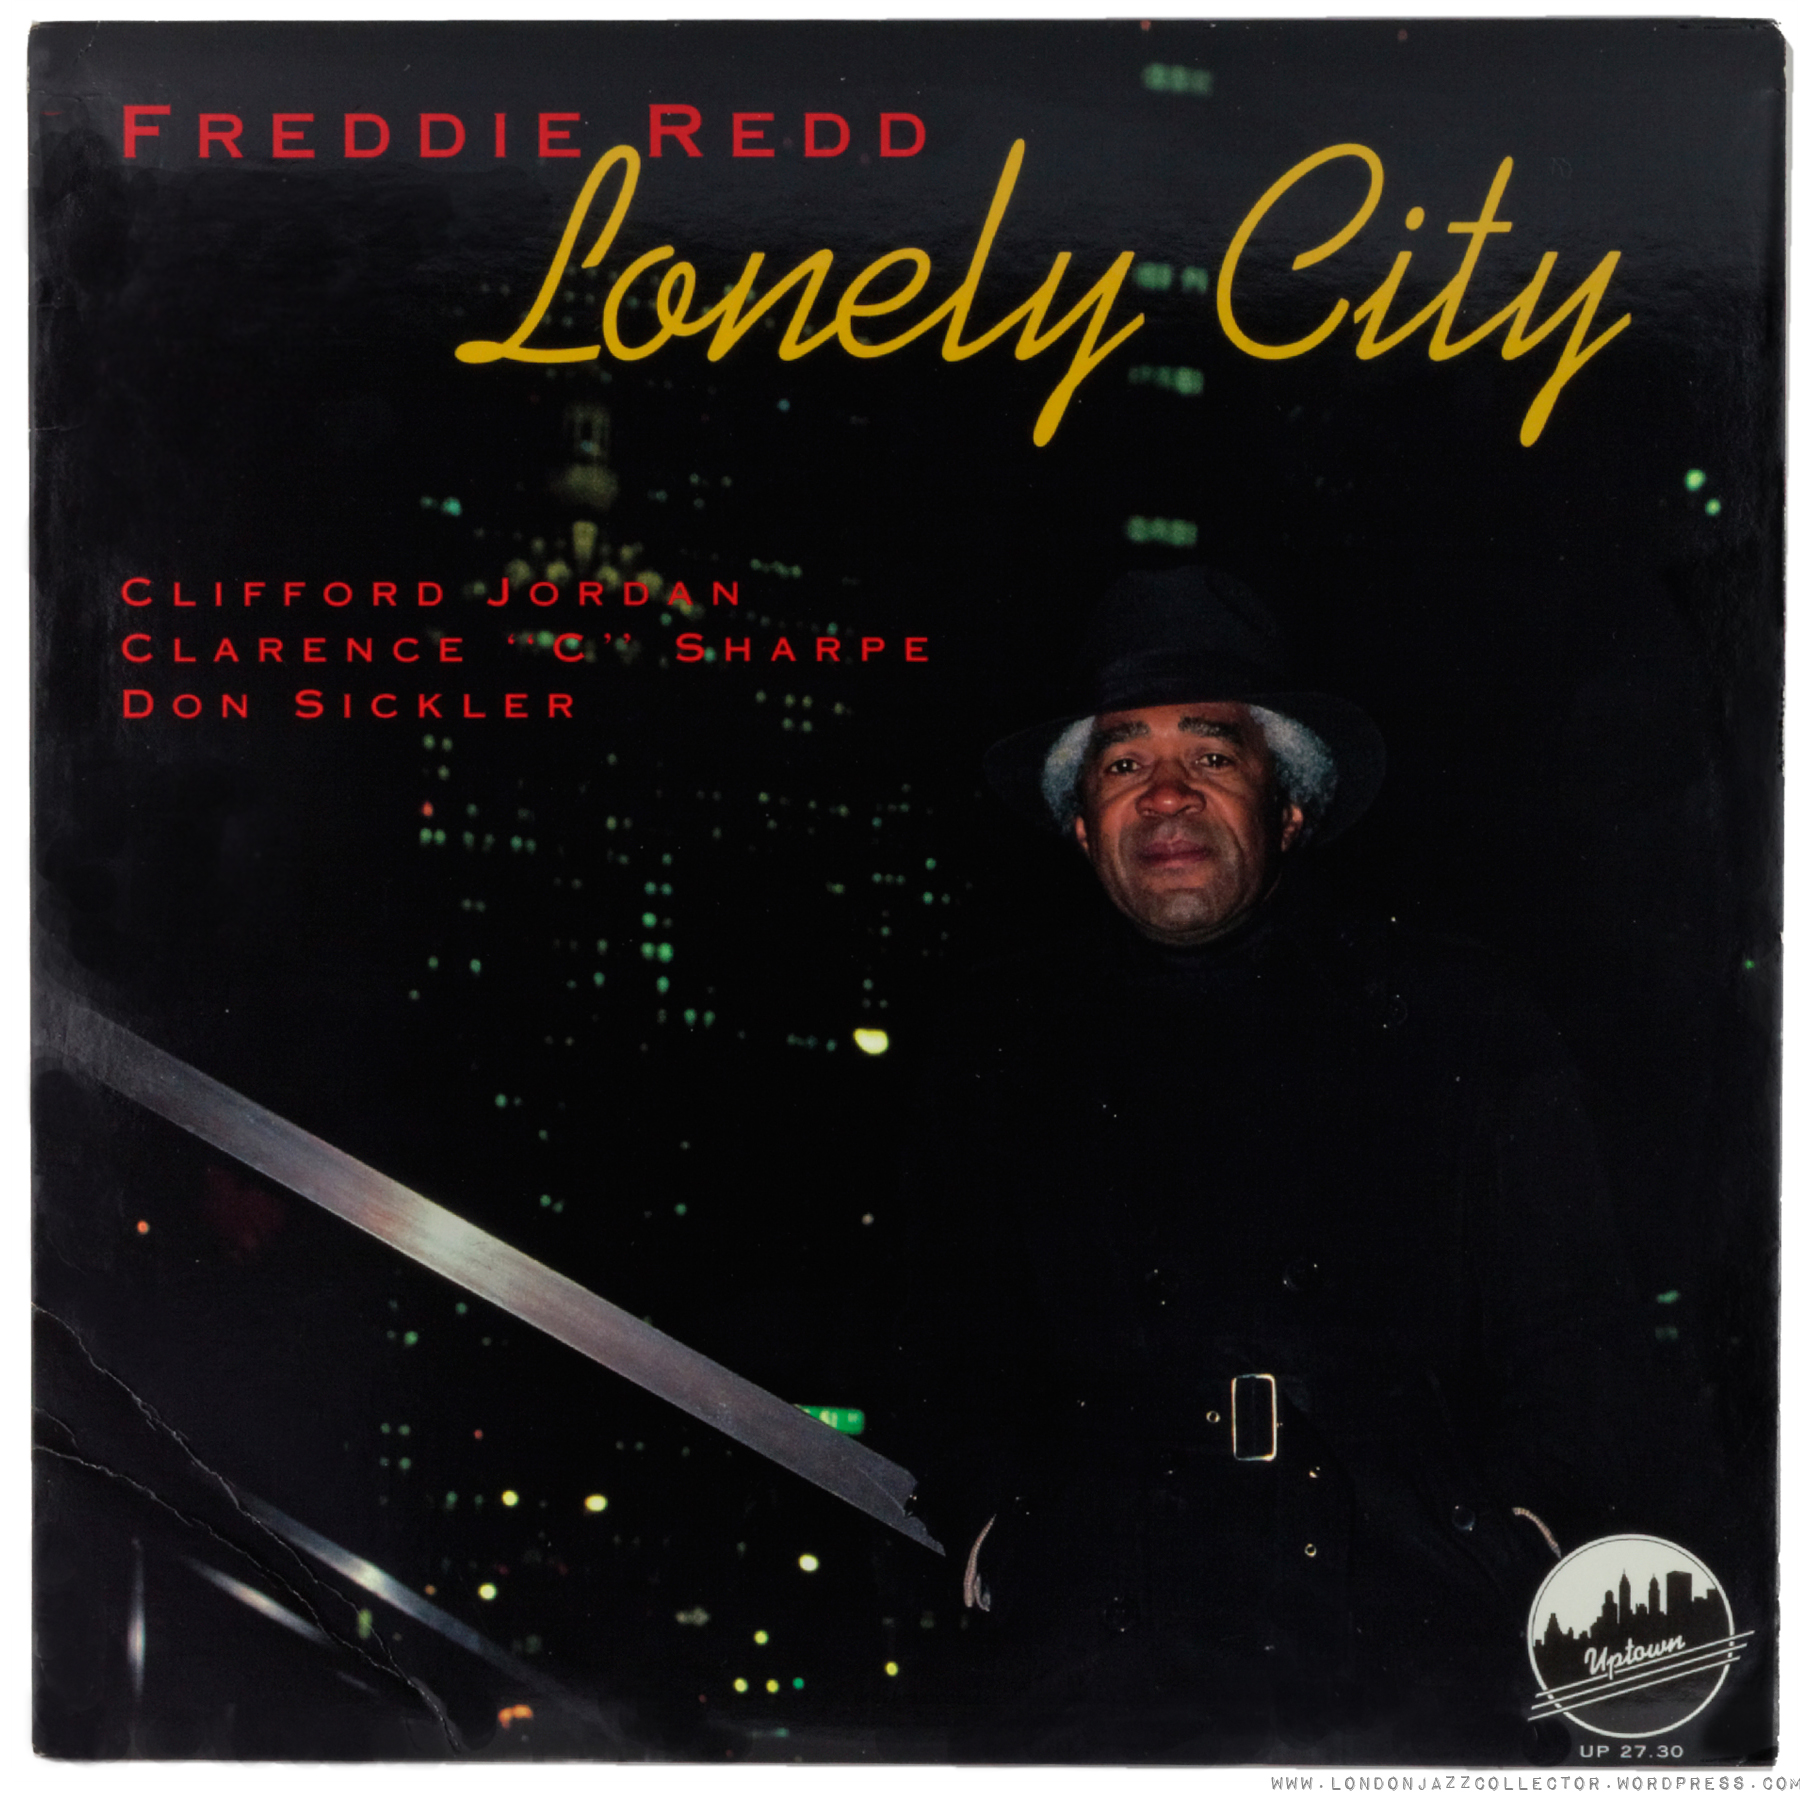 freddie-redd-lonely-city-1800-ljc1-2.jpg